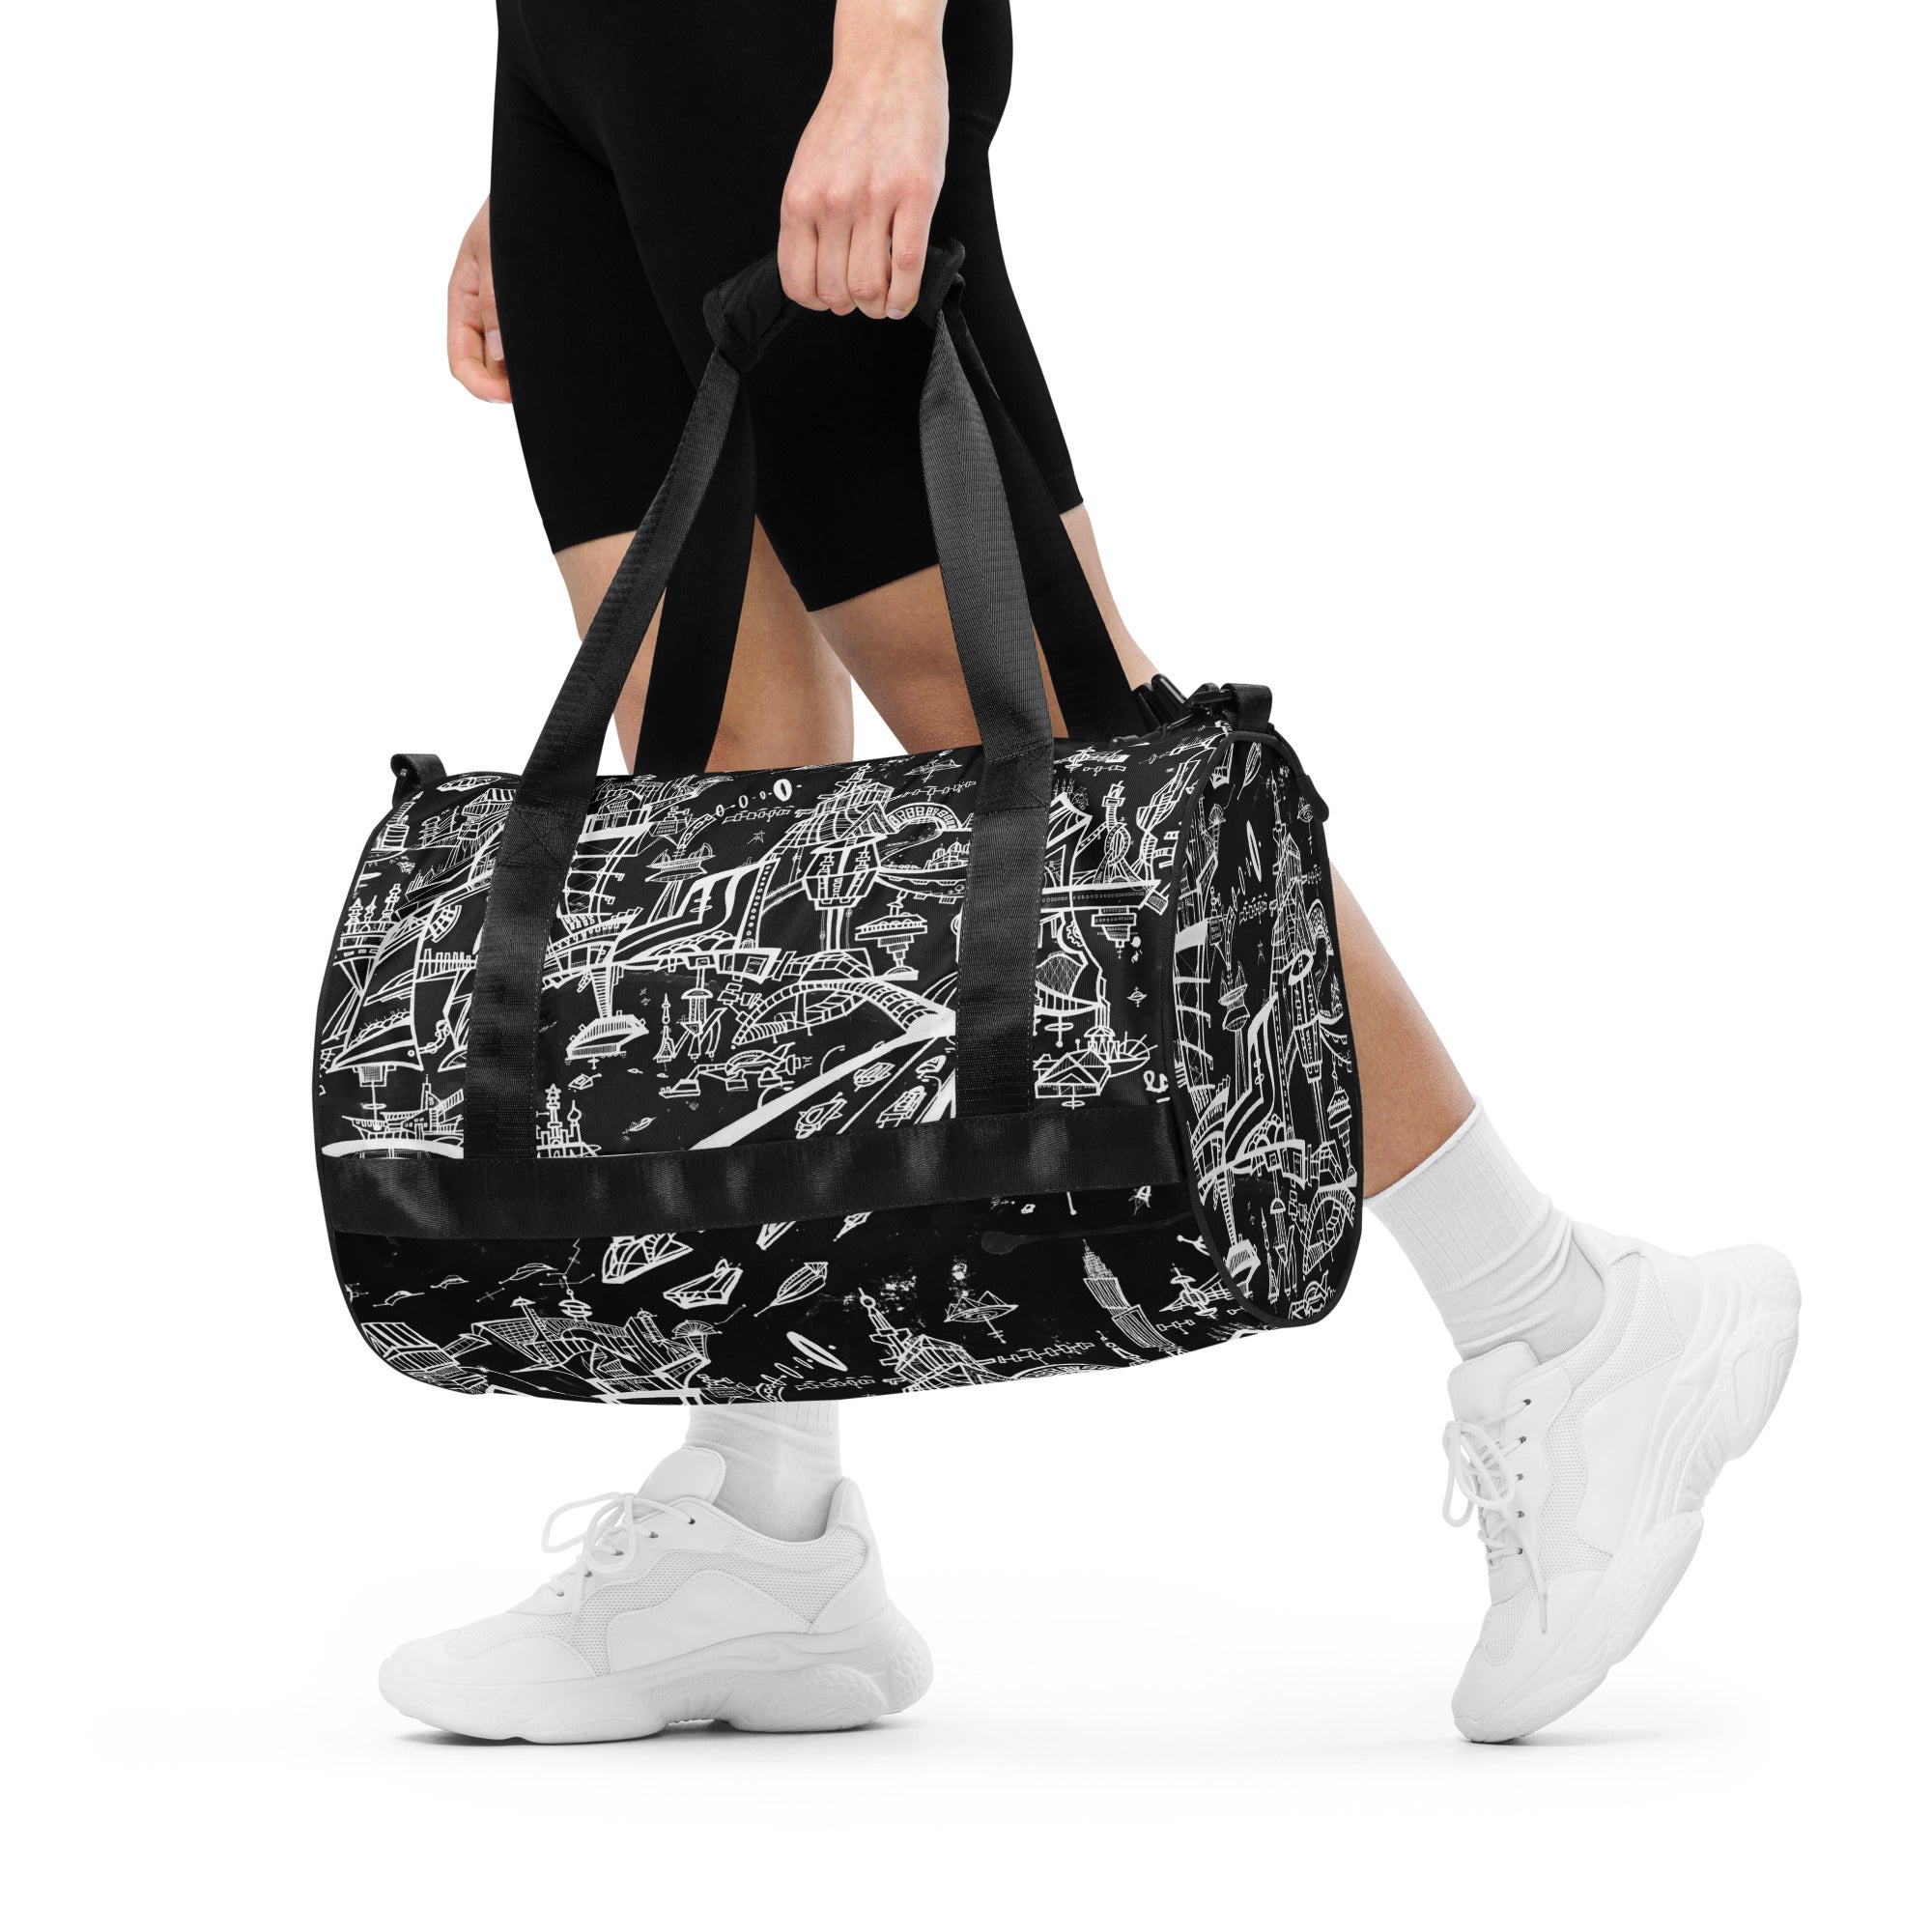 SuperFuture Black Rauthentic ArtWear gym bag